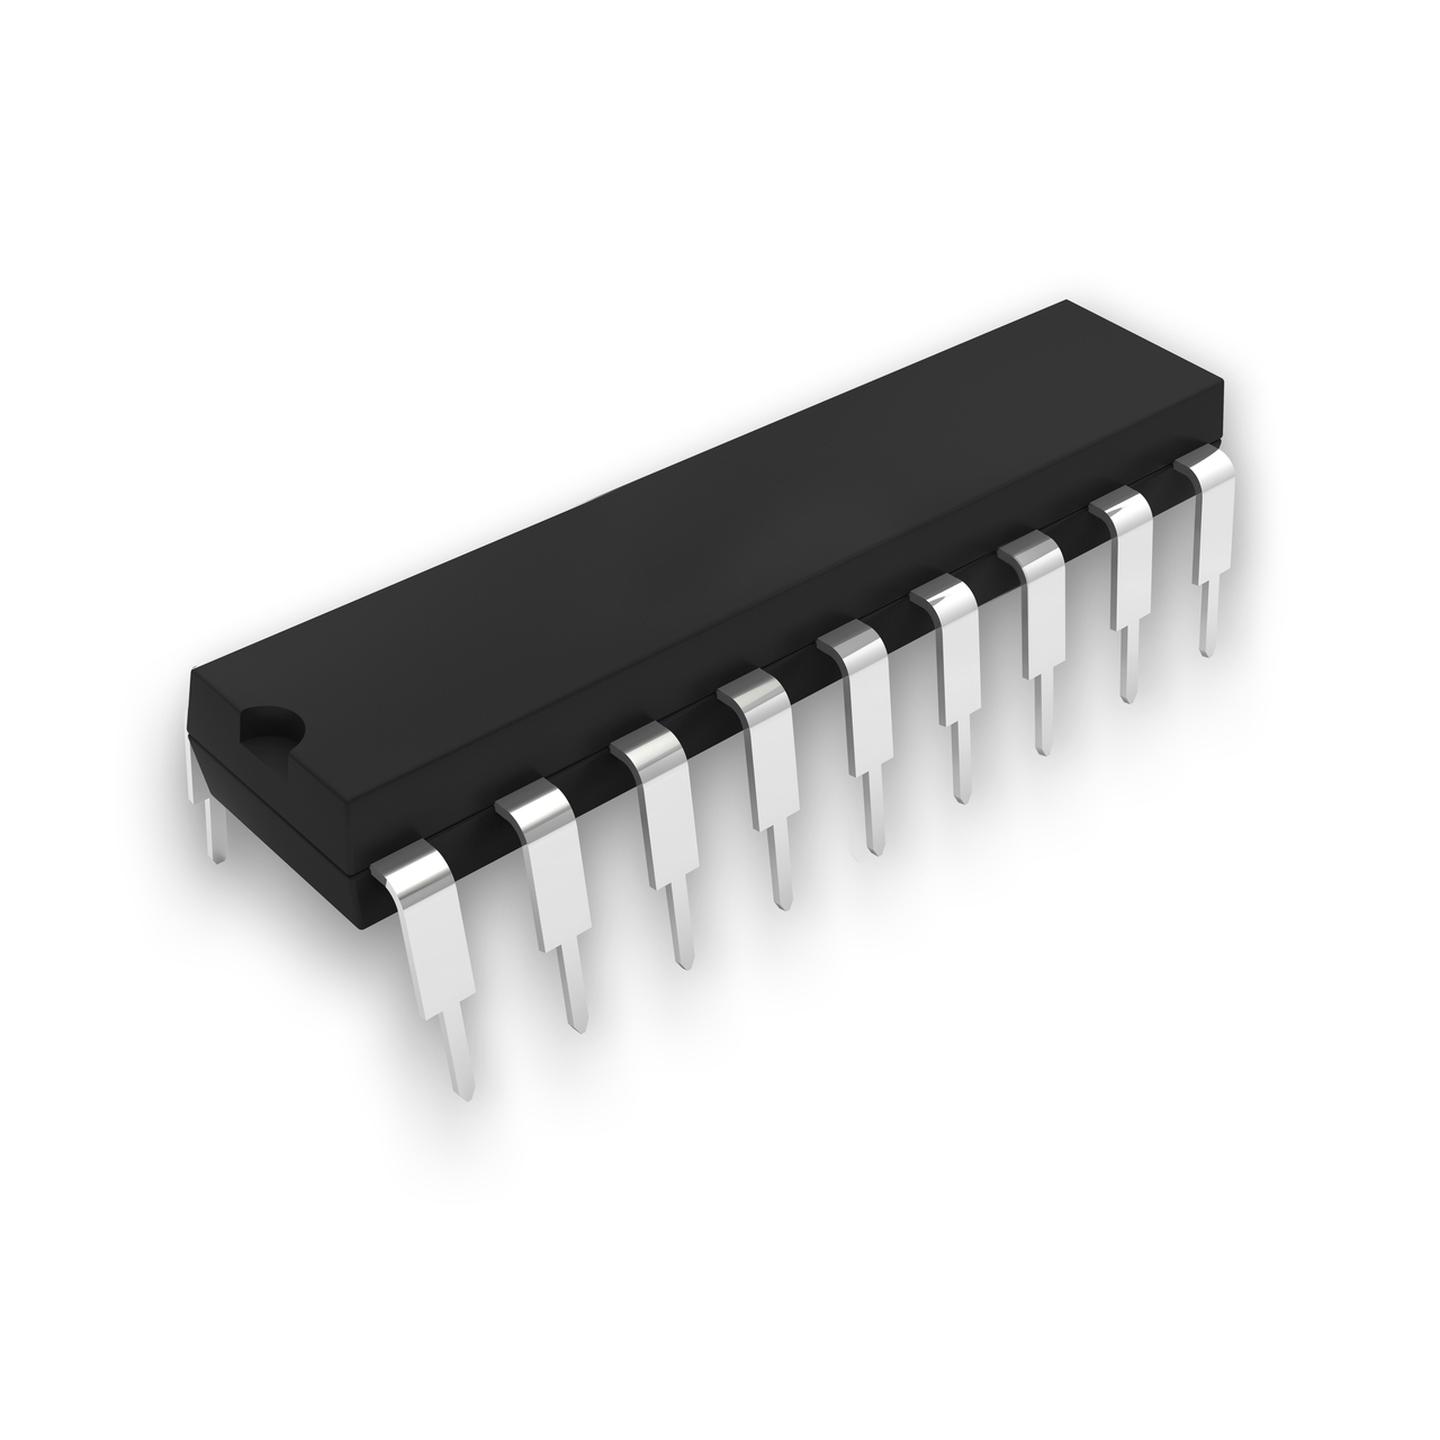 PIC16F88-I/P Enhanced FLASH Microcontroller with nanoWatt Technology